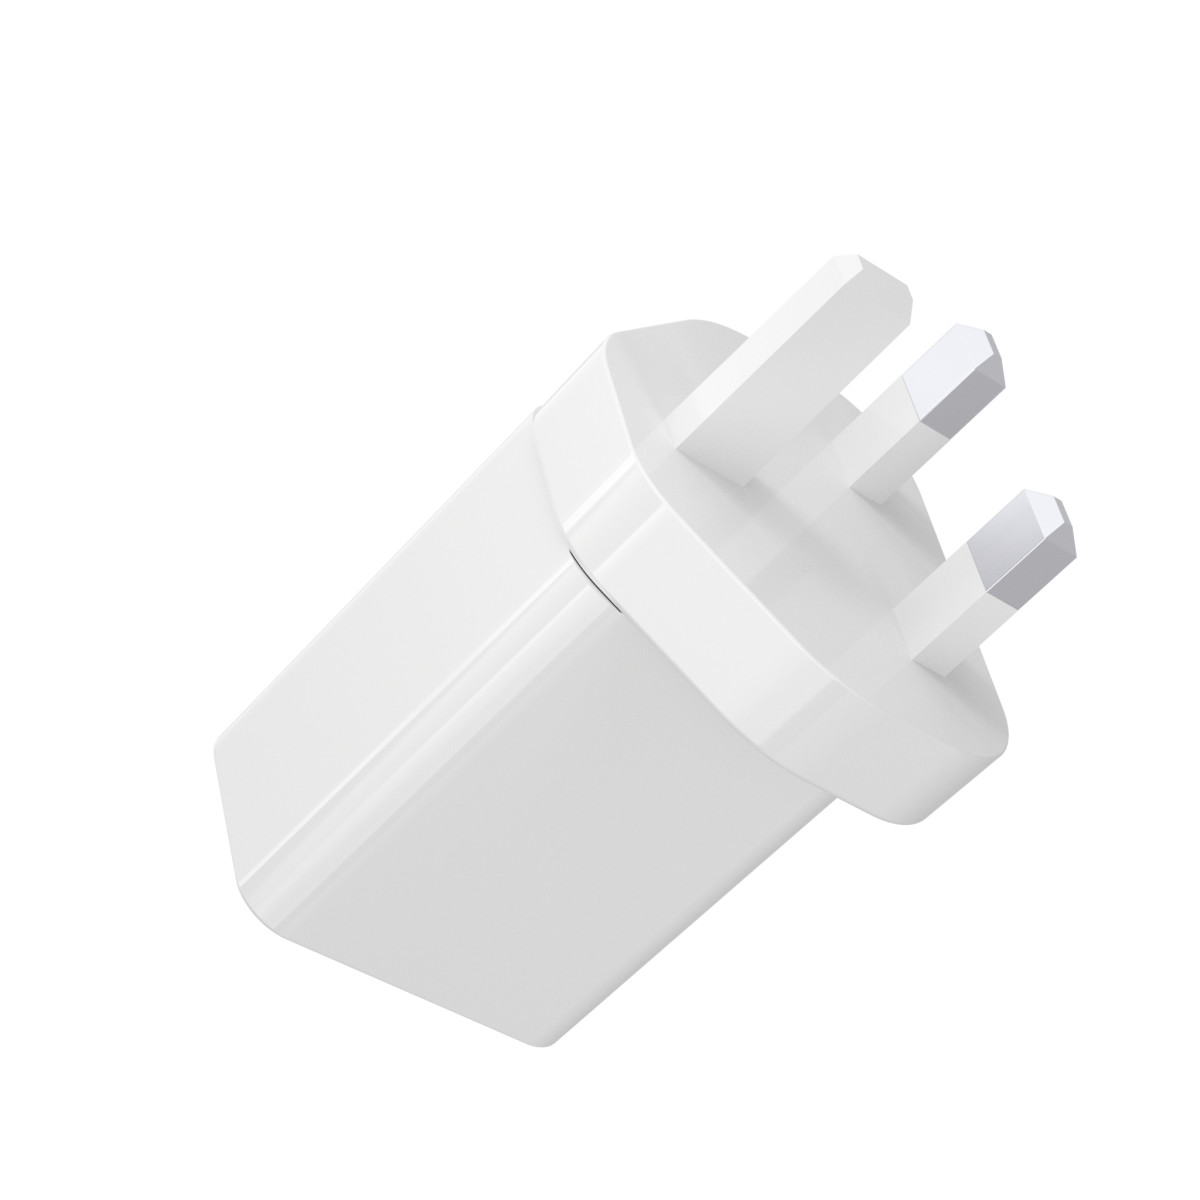 Essential USB-C-20W-Wall-Plug-White-UK